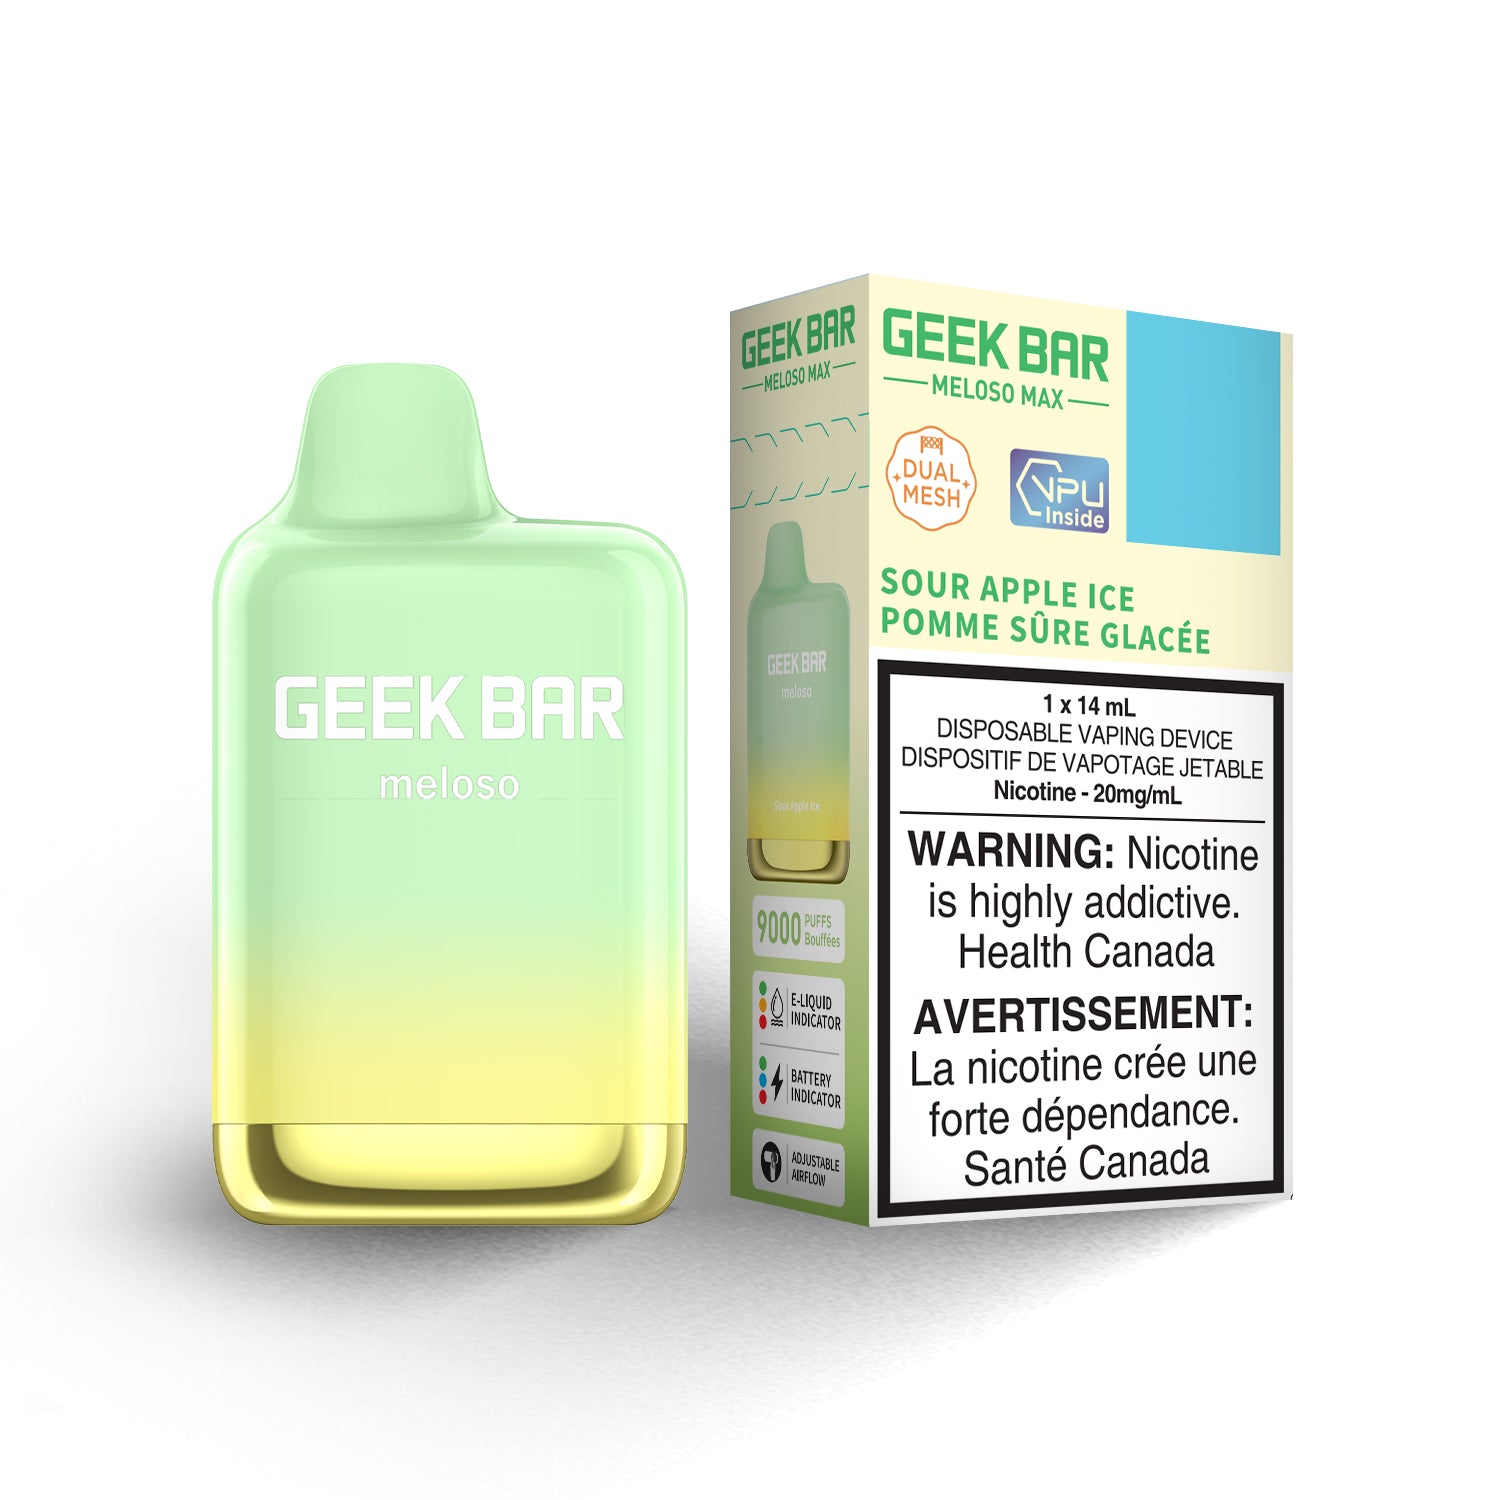 GEEK BAR 9000 - SOUR APPLE ICE